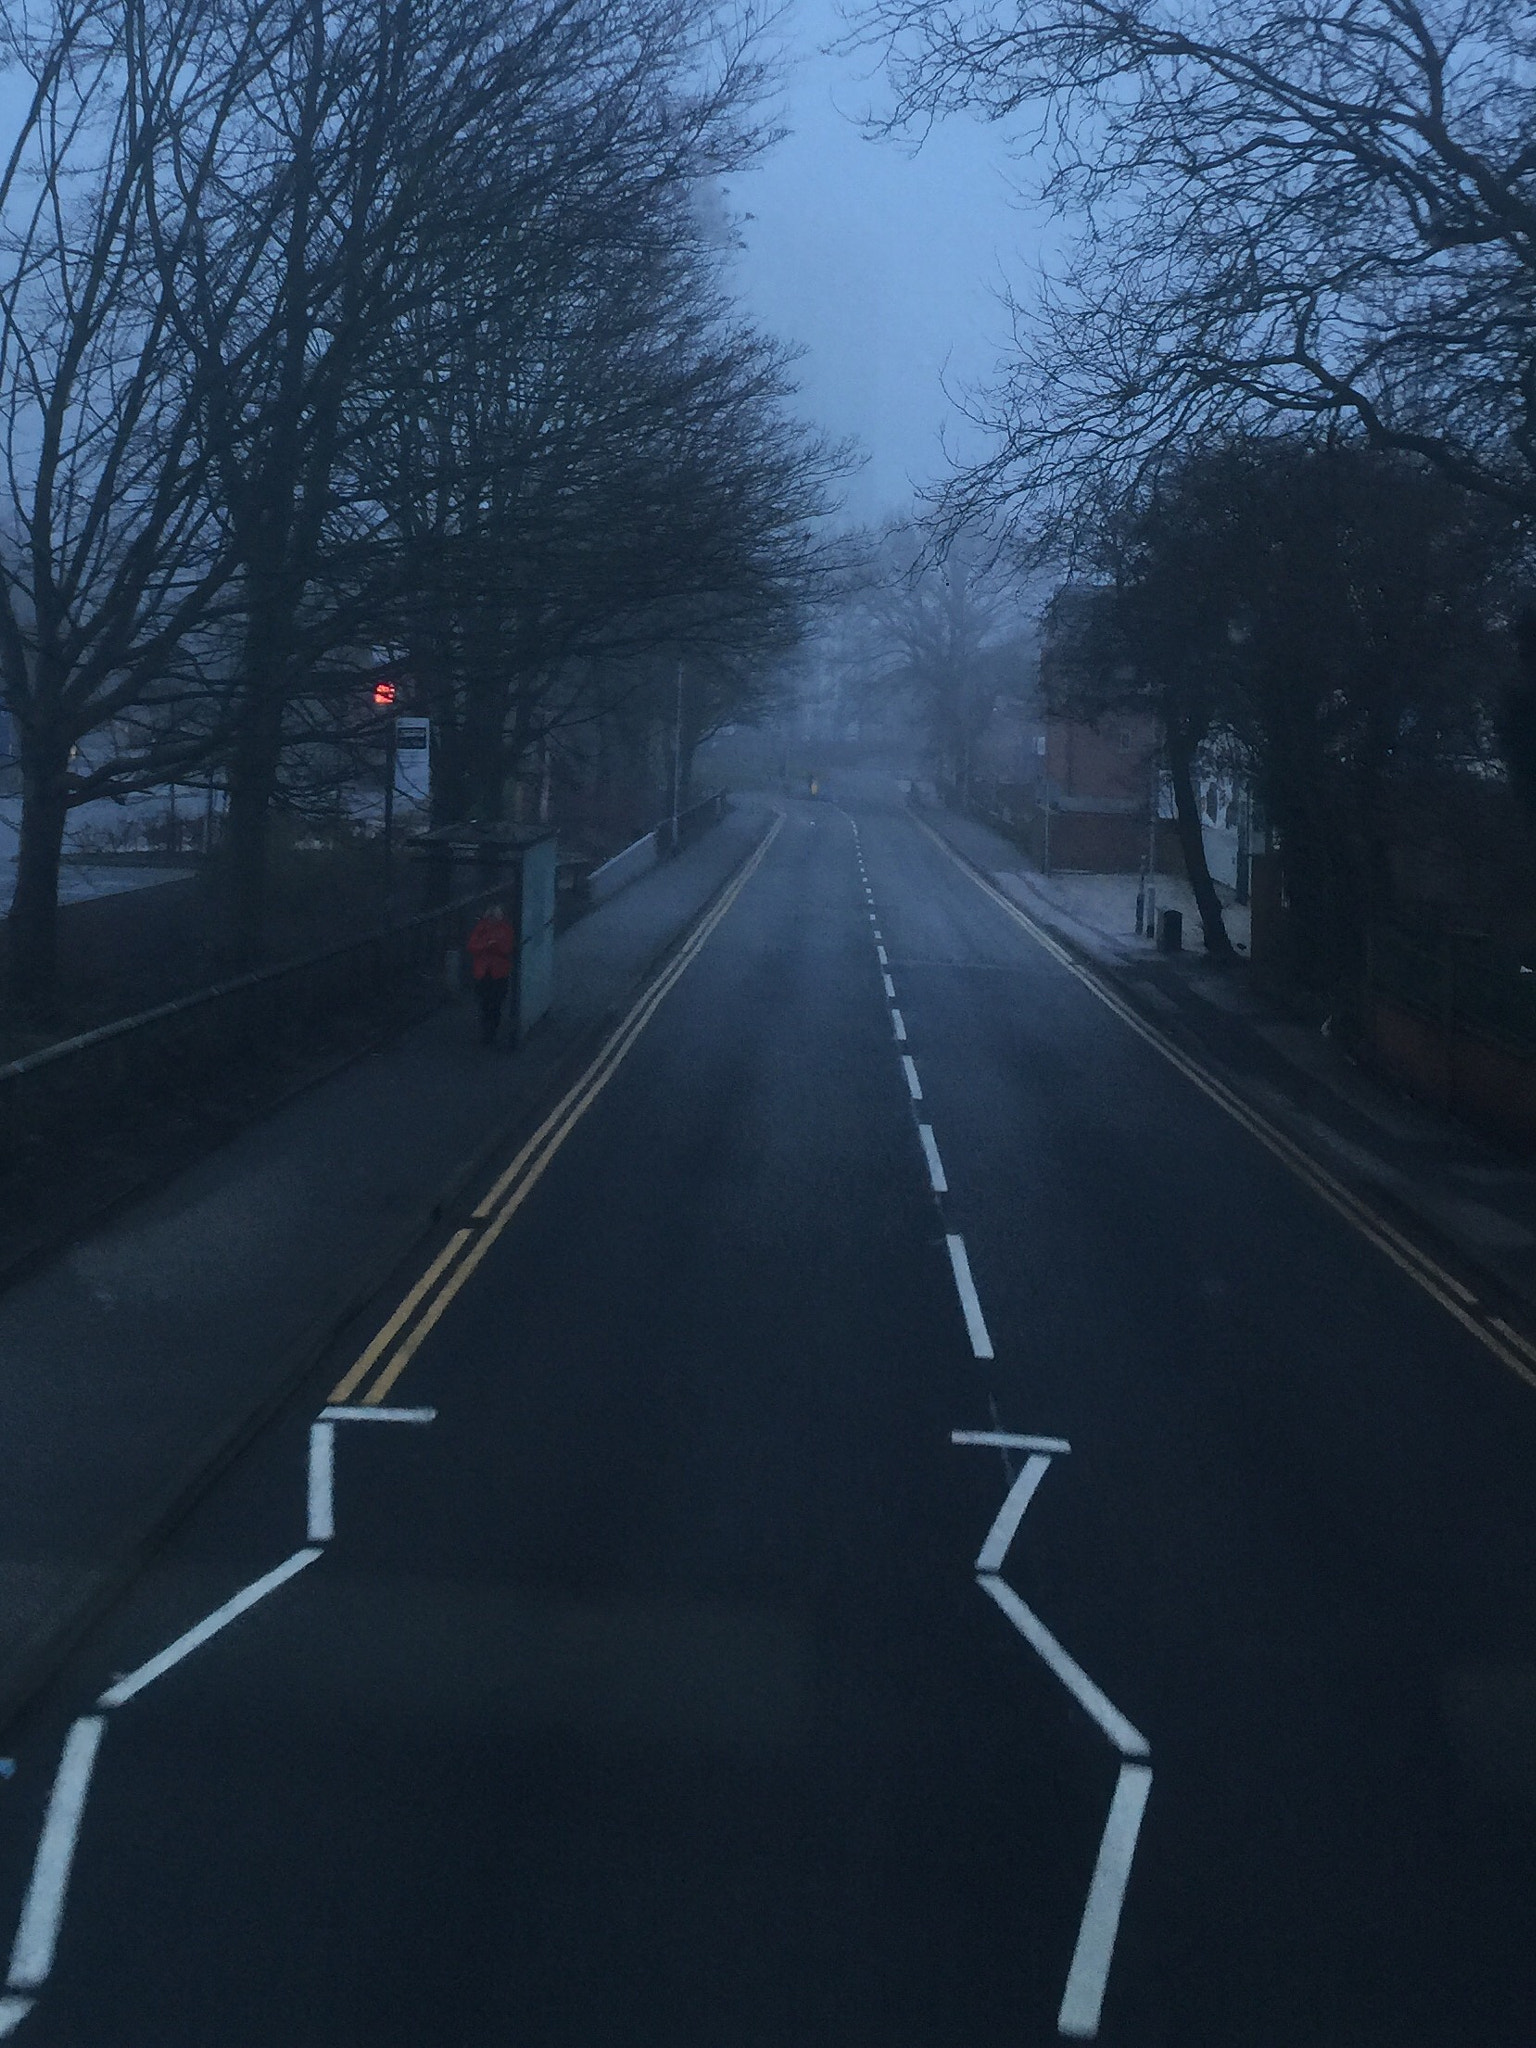 Foggy morning in England